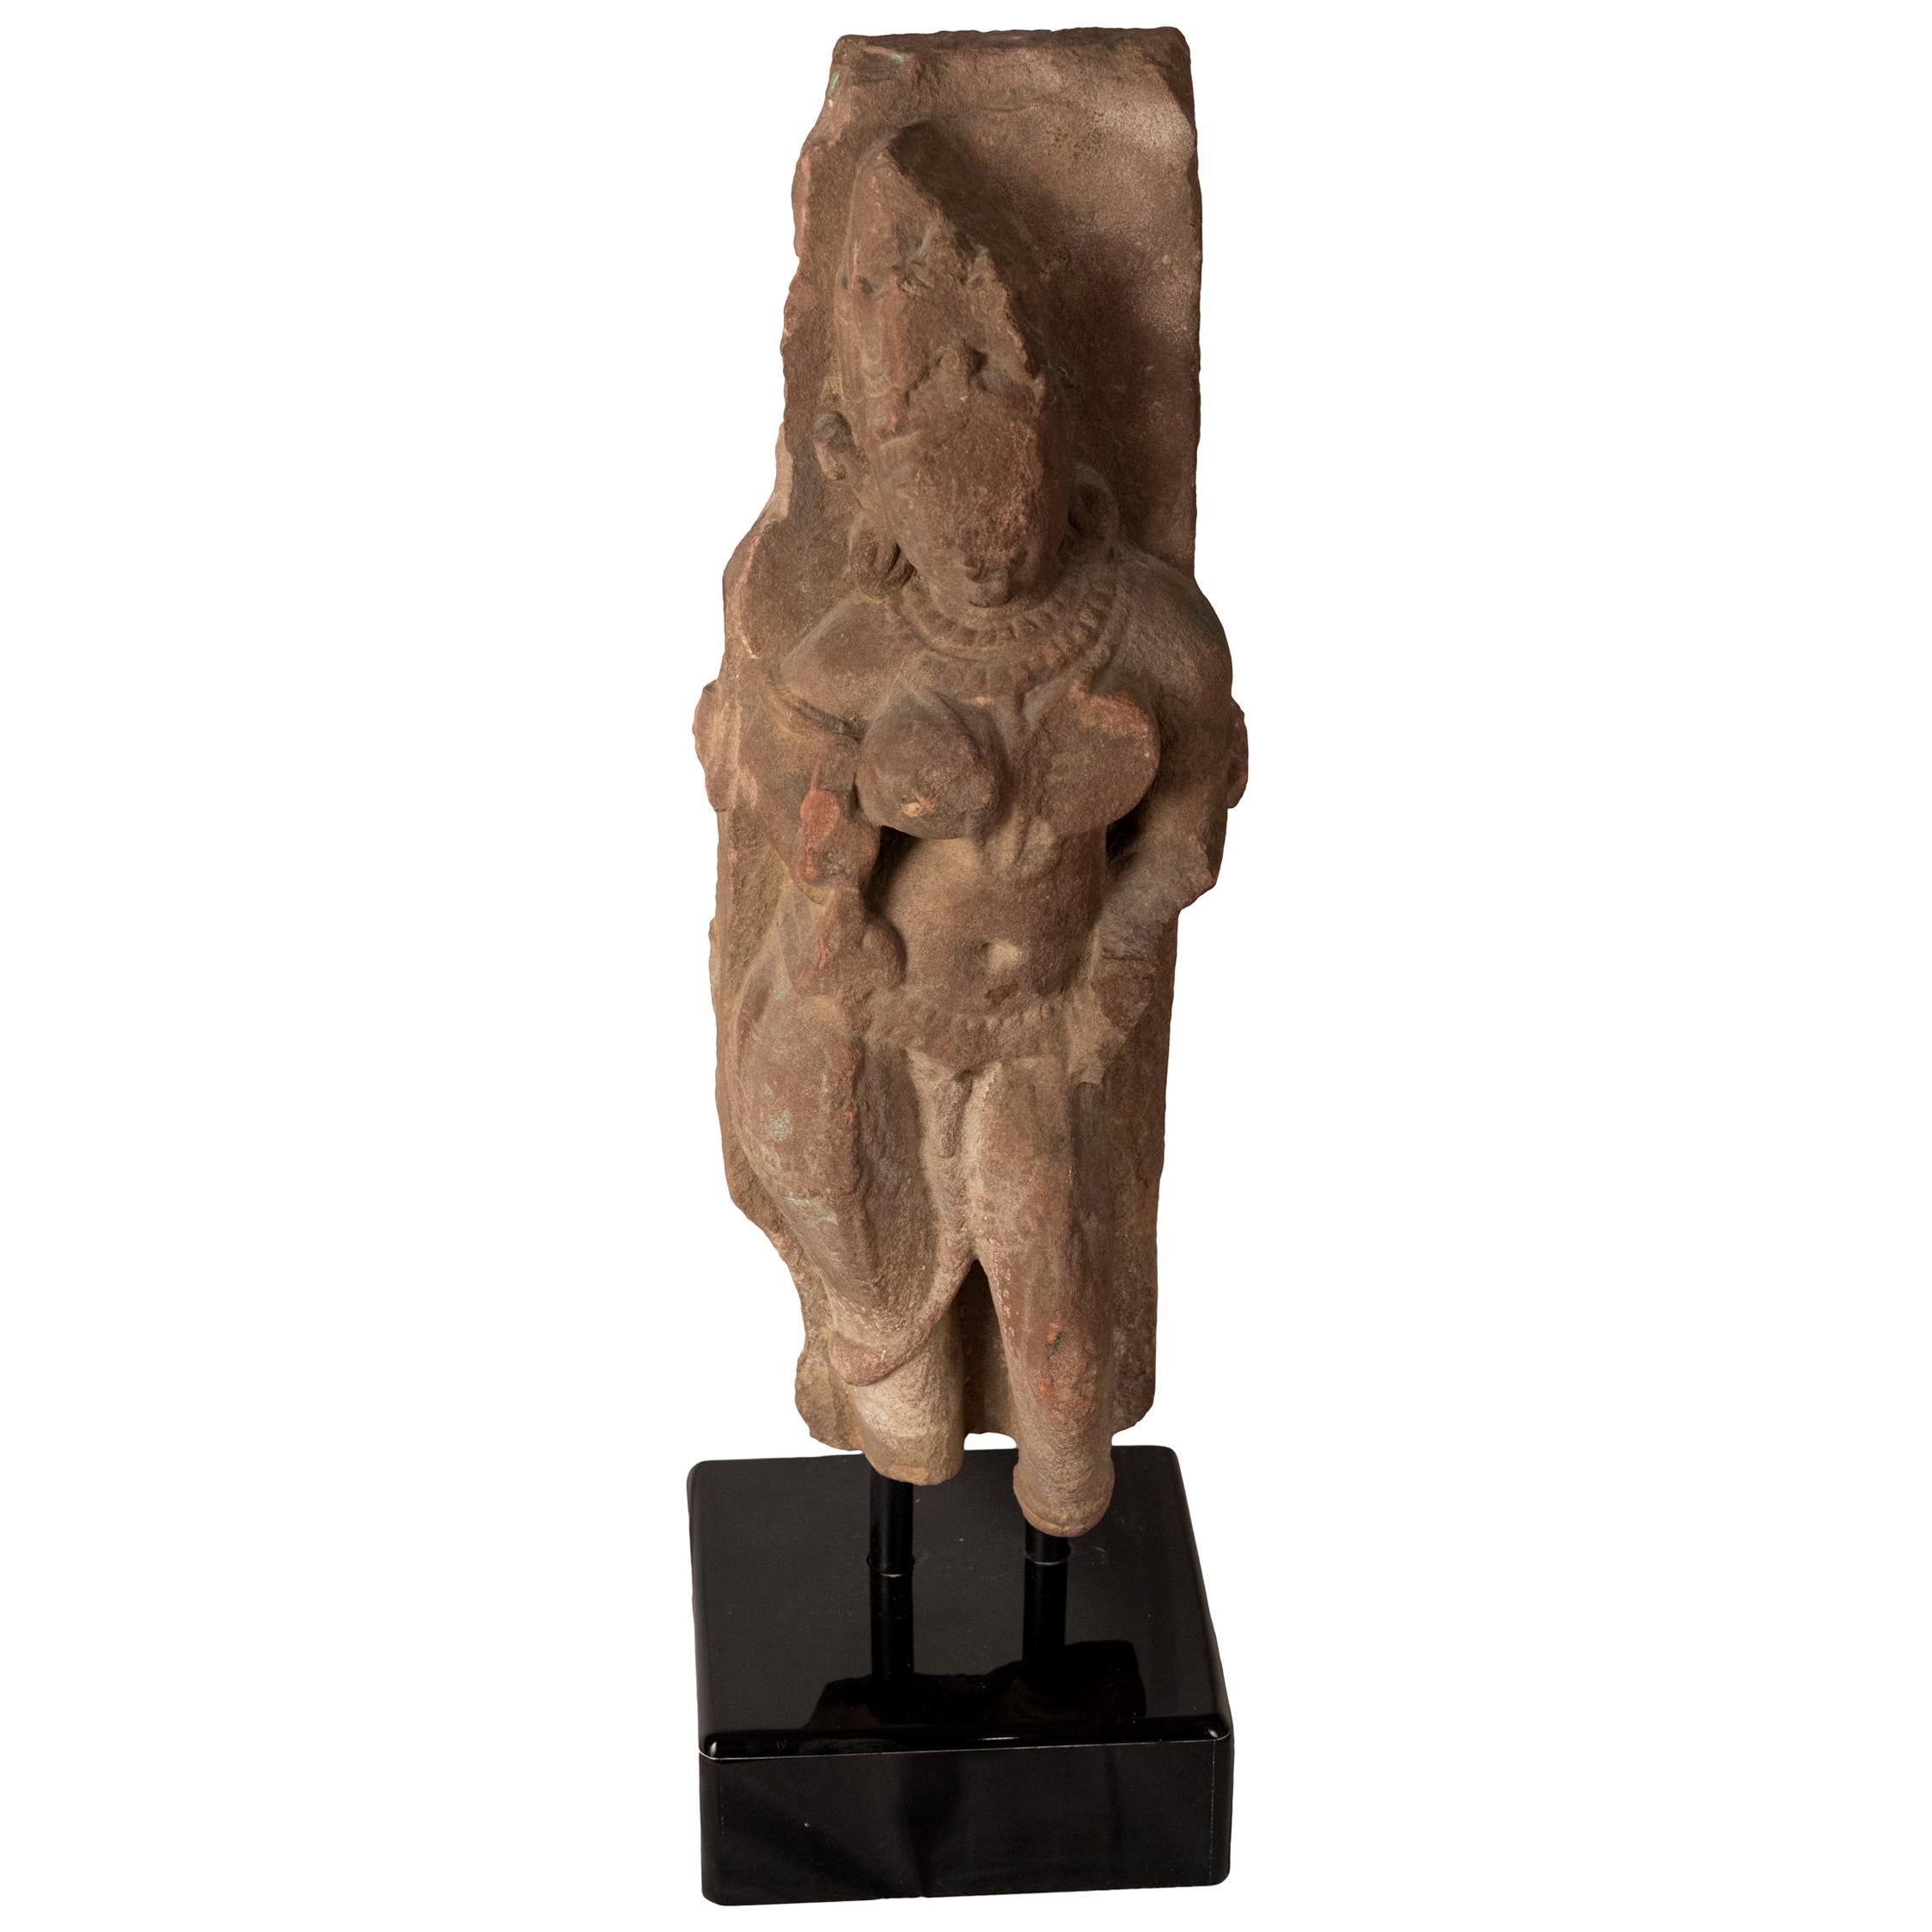 Hindu Deity Figure Carved in Basalt, 'circa 1850', India